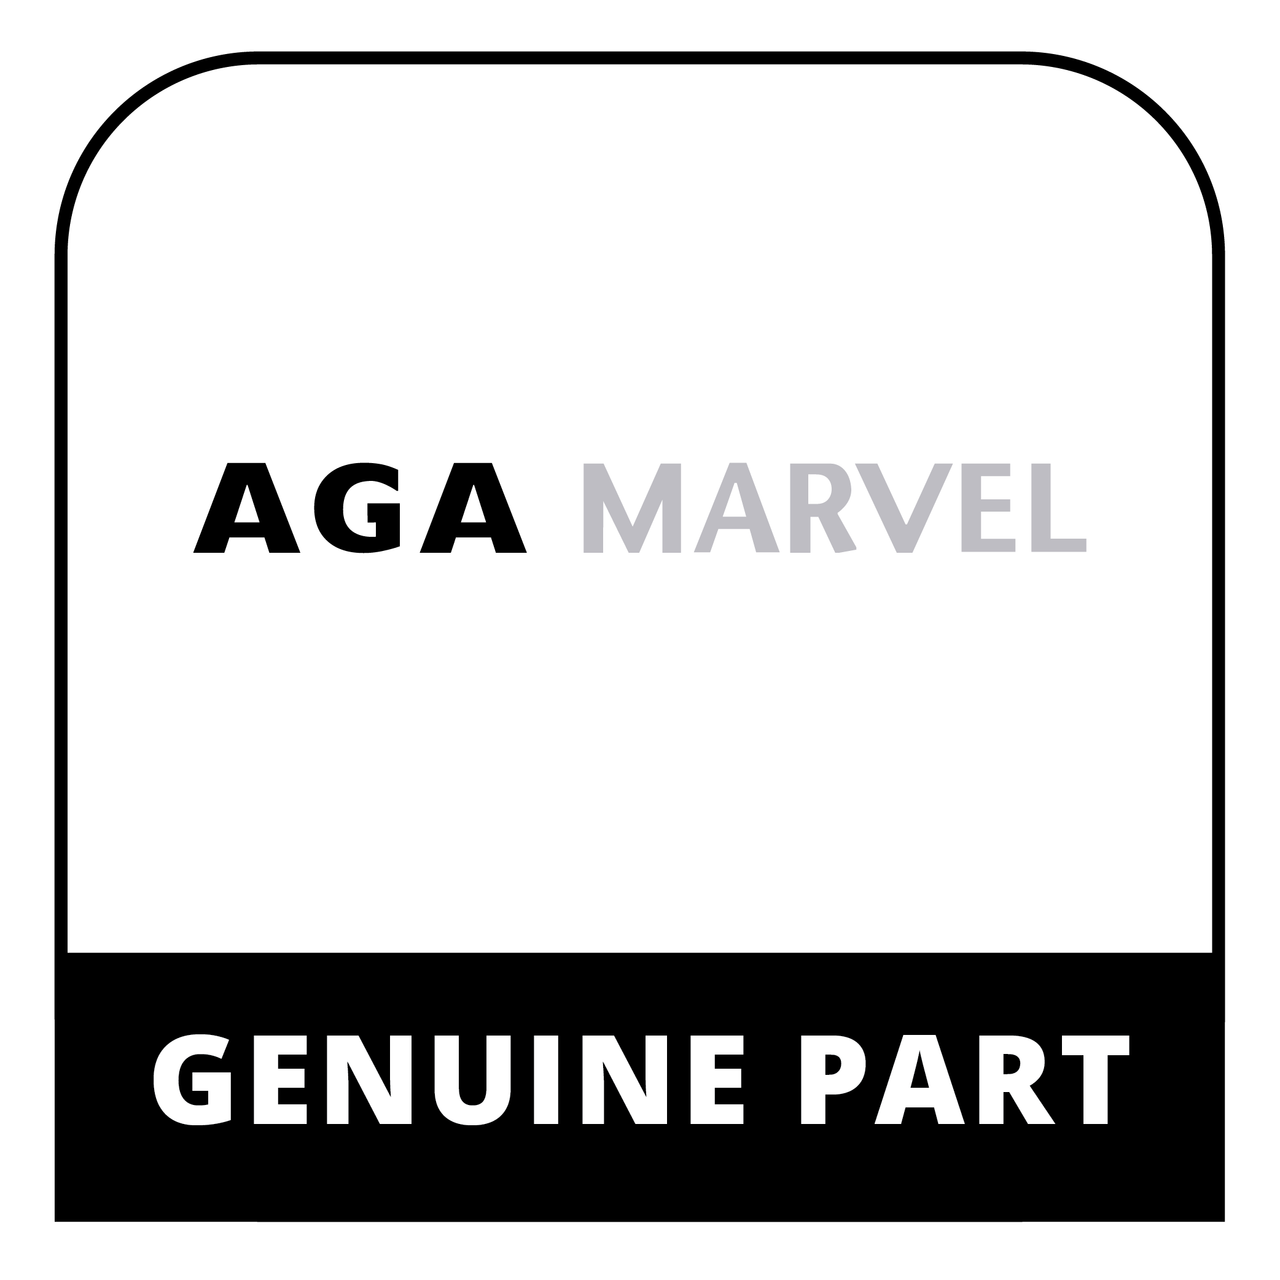 AGA Marvel C1958 - T00005Axx-Berrington Glass - Genuine AGA Marvel Part